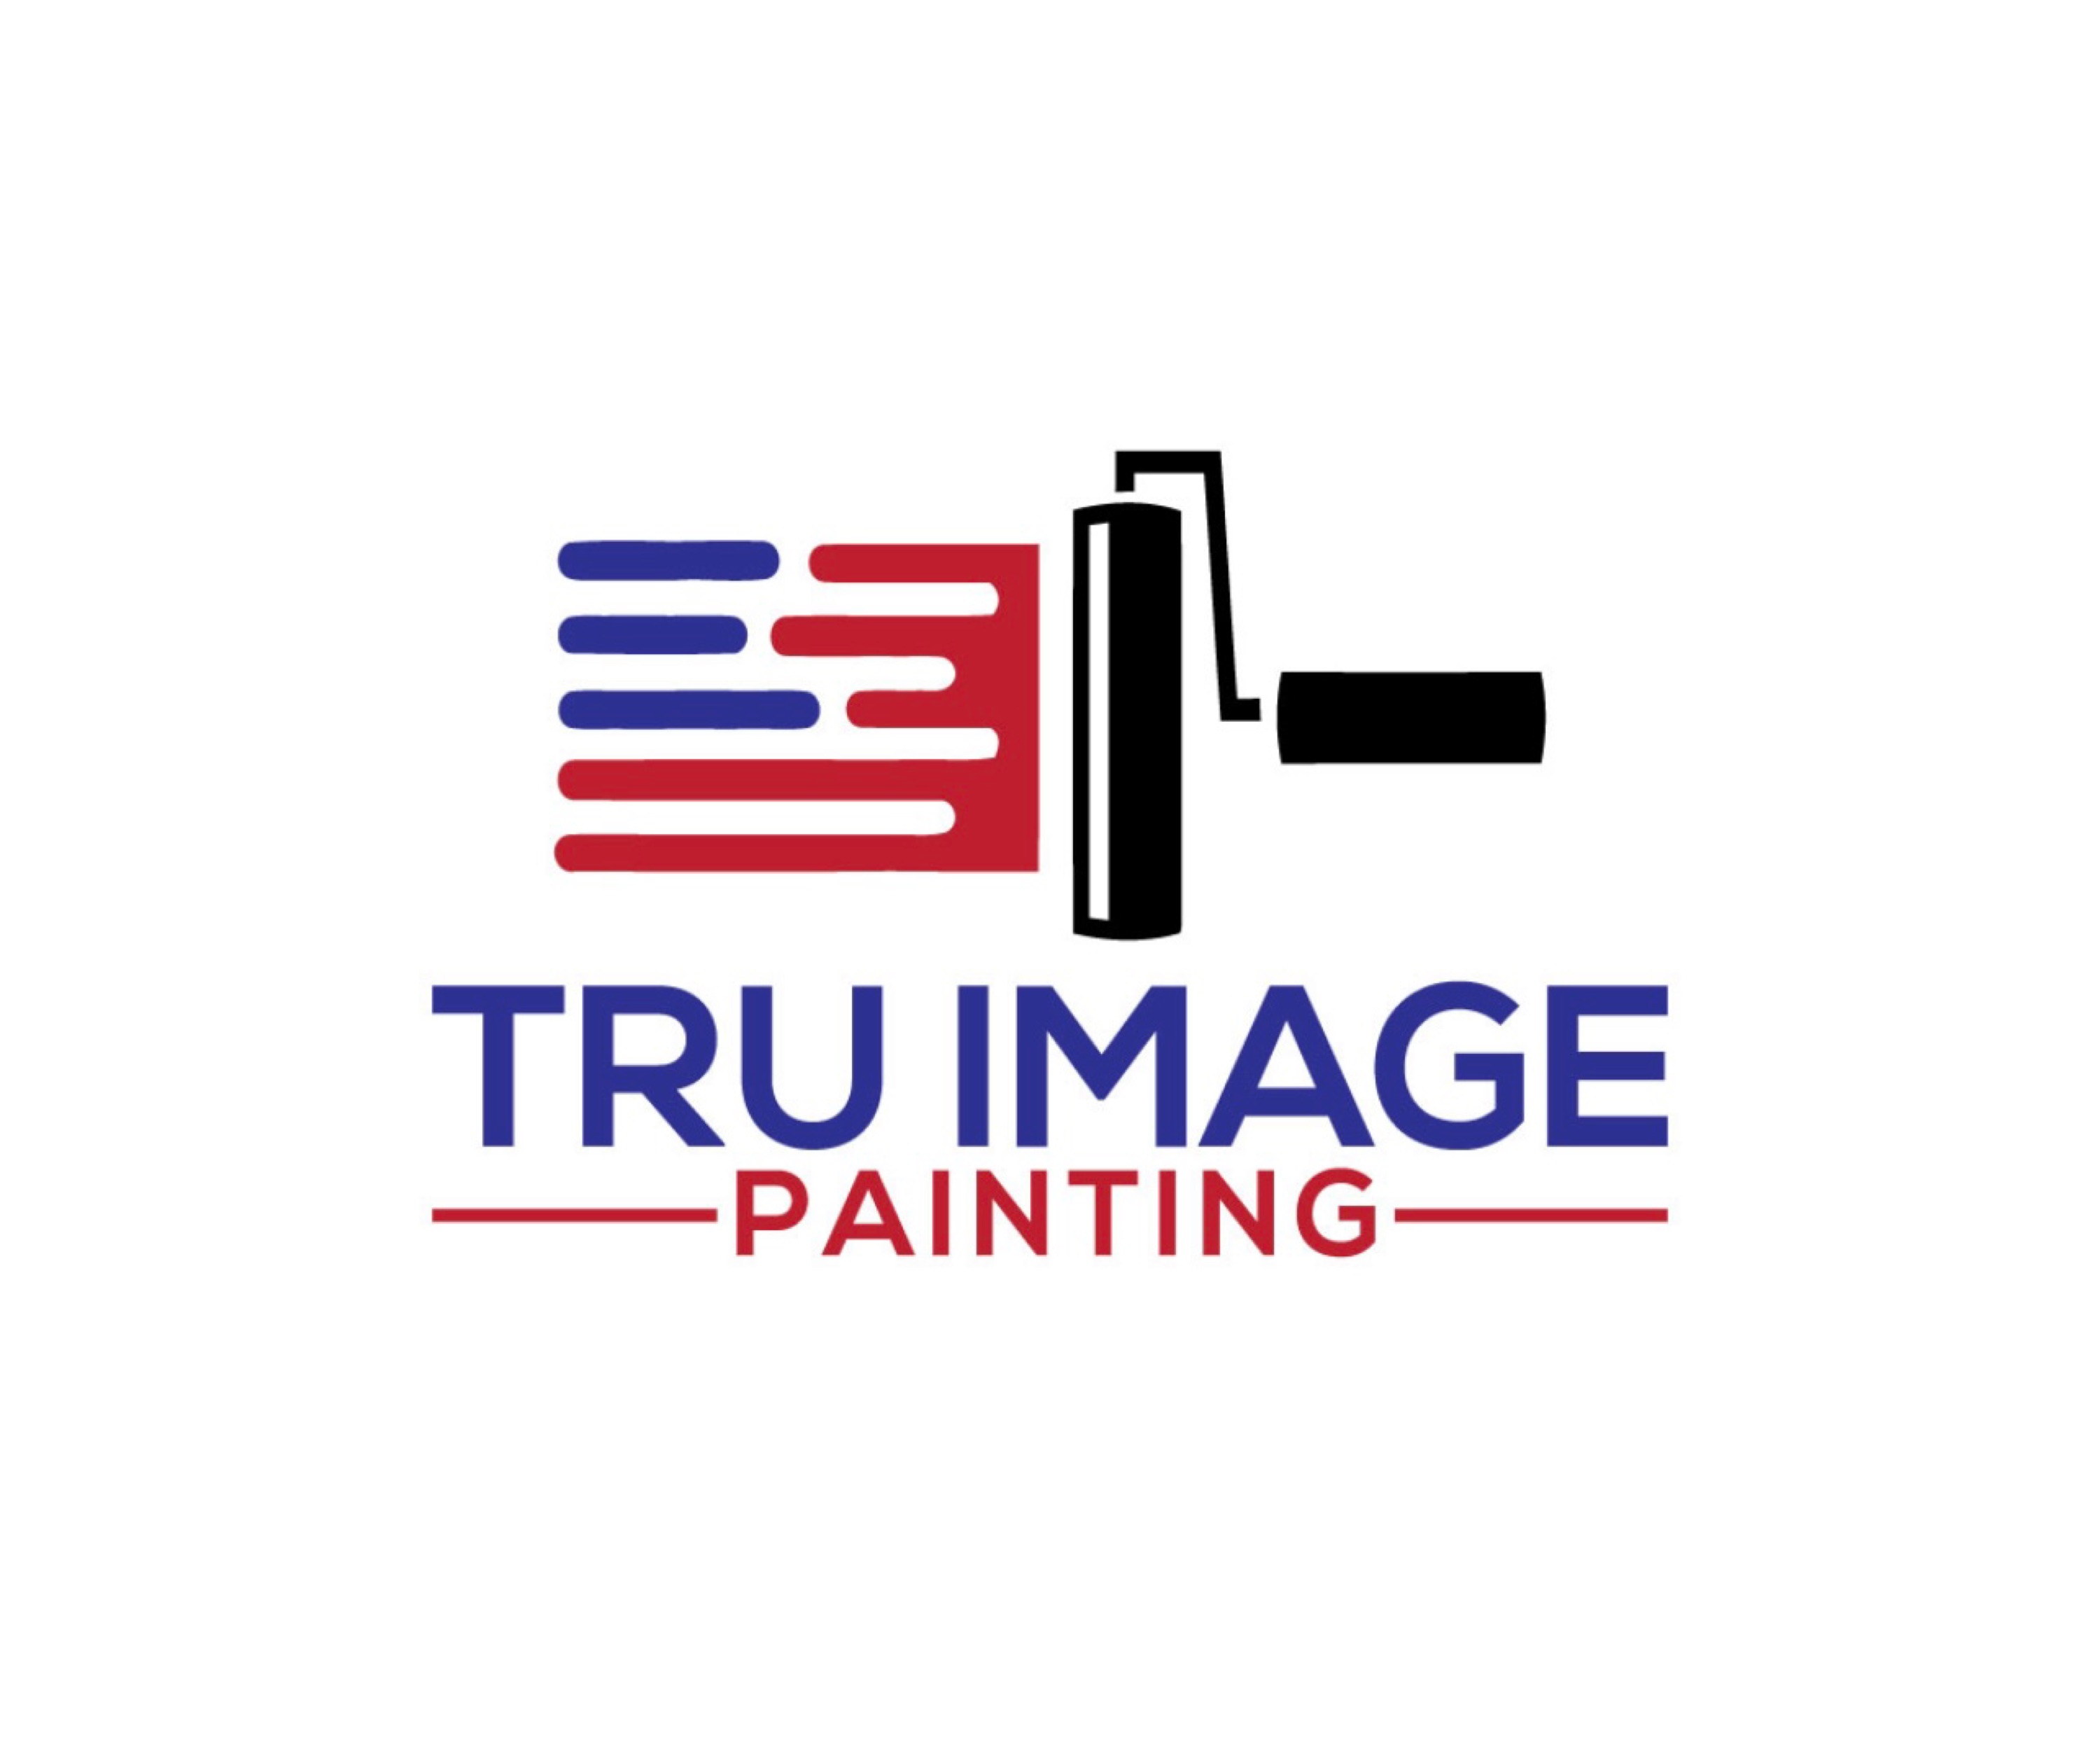 TRU IMAGE PAINTING, LLC Logo